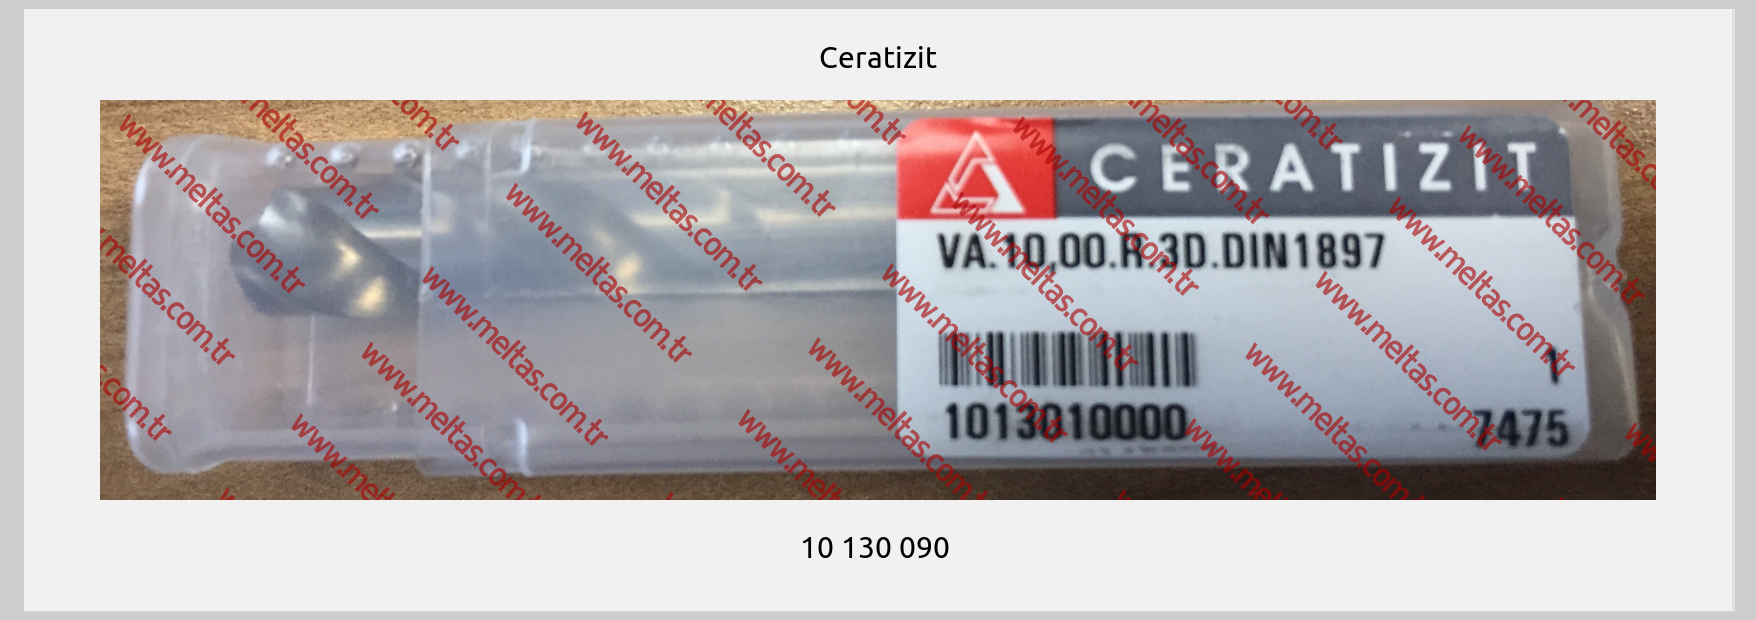 Ceratizit-10 130 090 